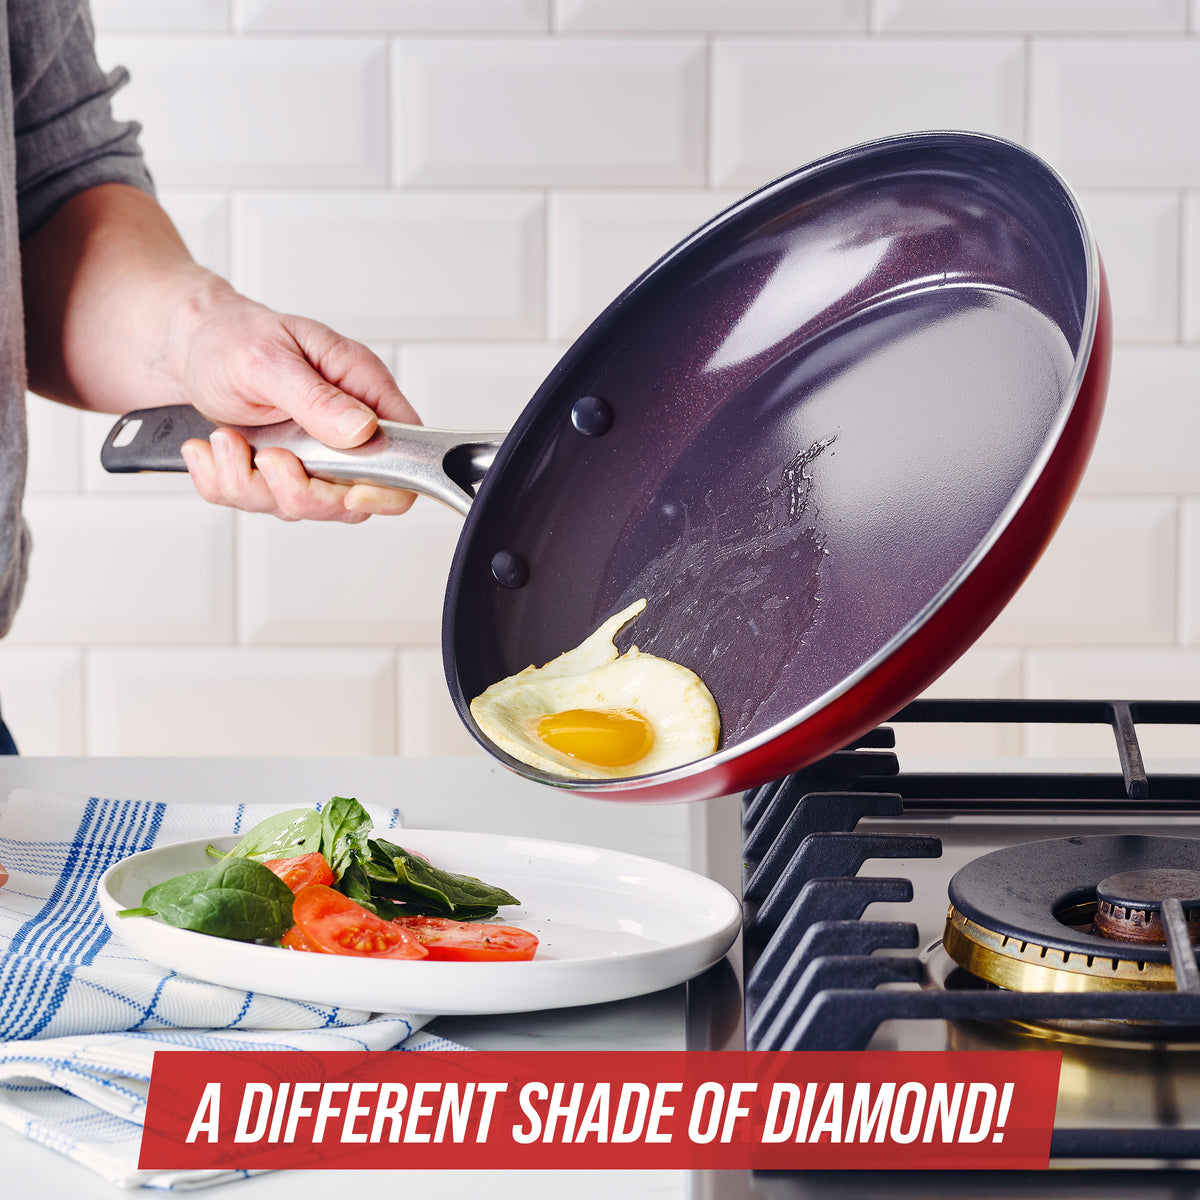 Blue Diamond Cookware 10 Inch Frying Pan Review